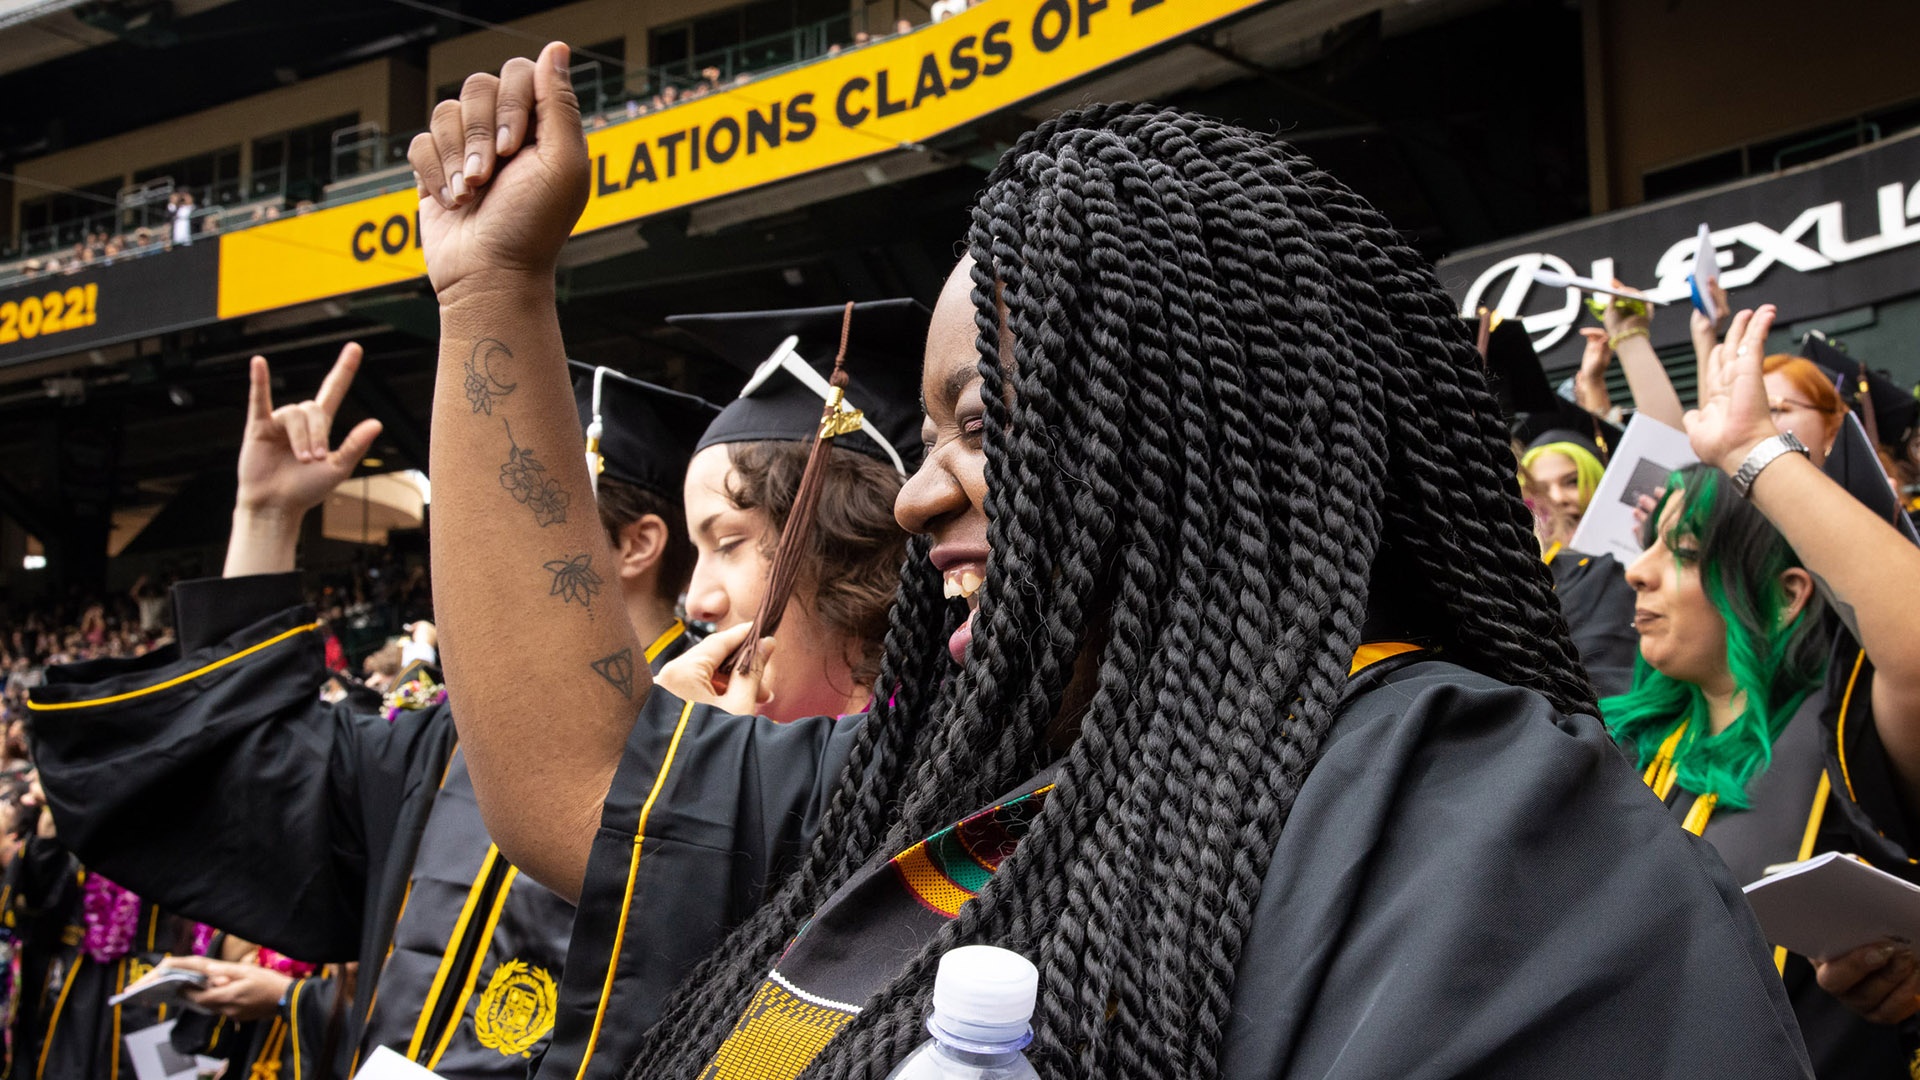 Female graduate with braids raises a celebratory fist